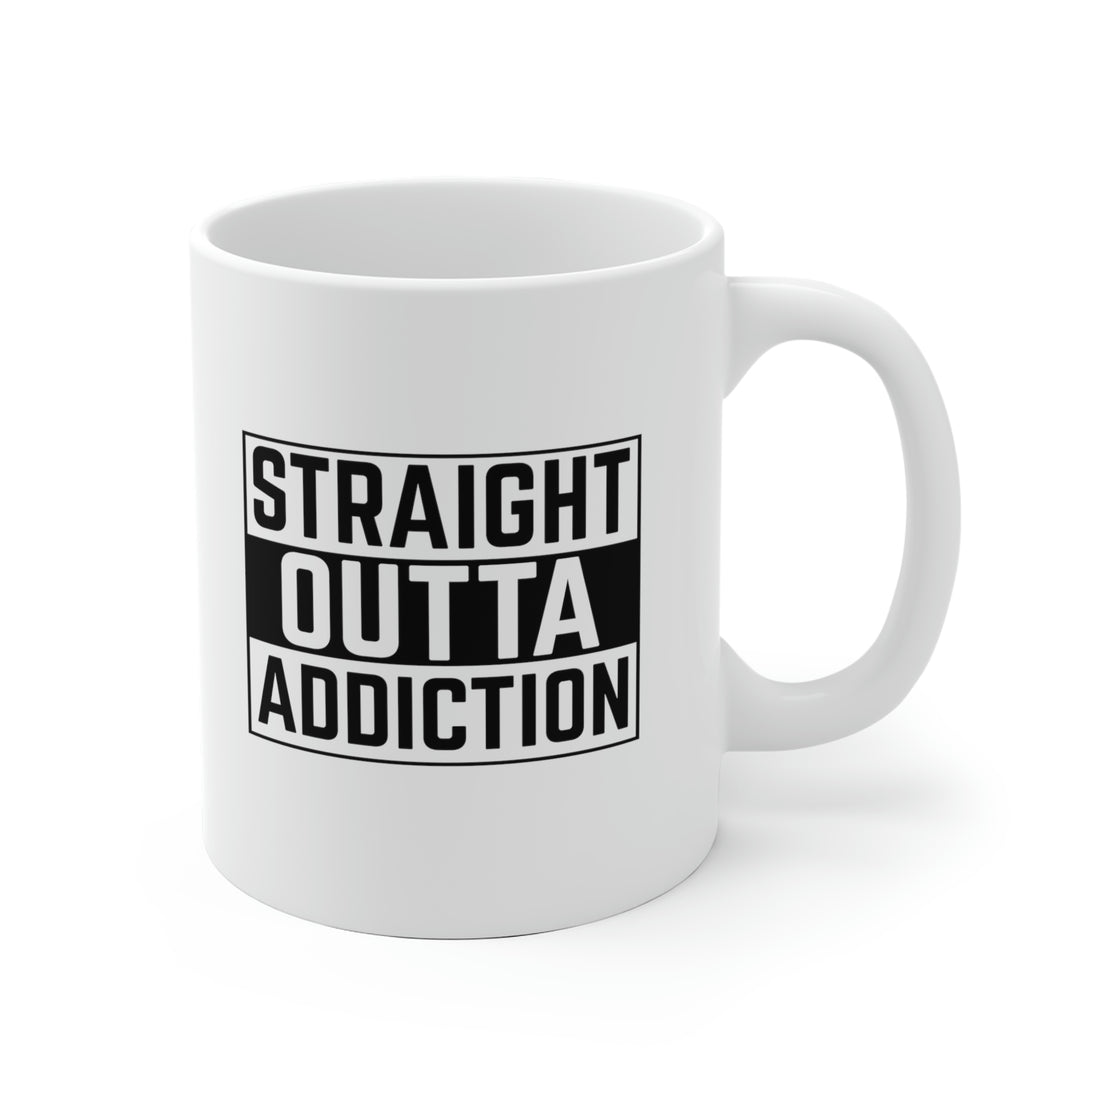 Straight Outta Addiction - White Ceramic Mug 2 sizes Available